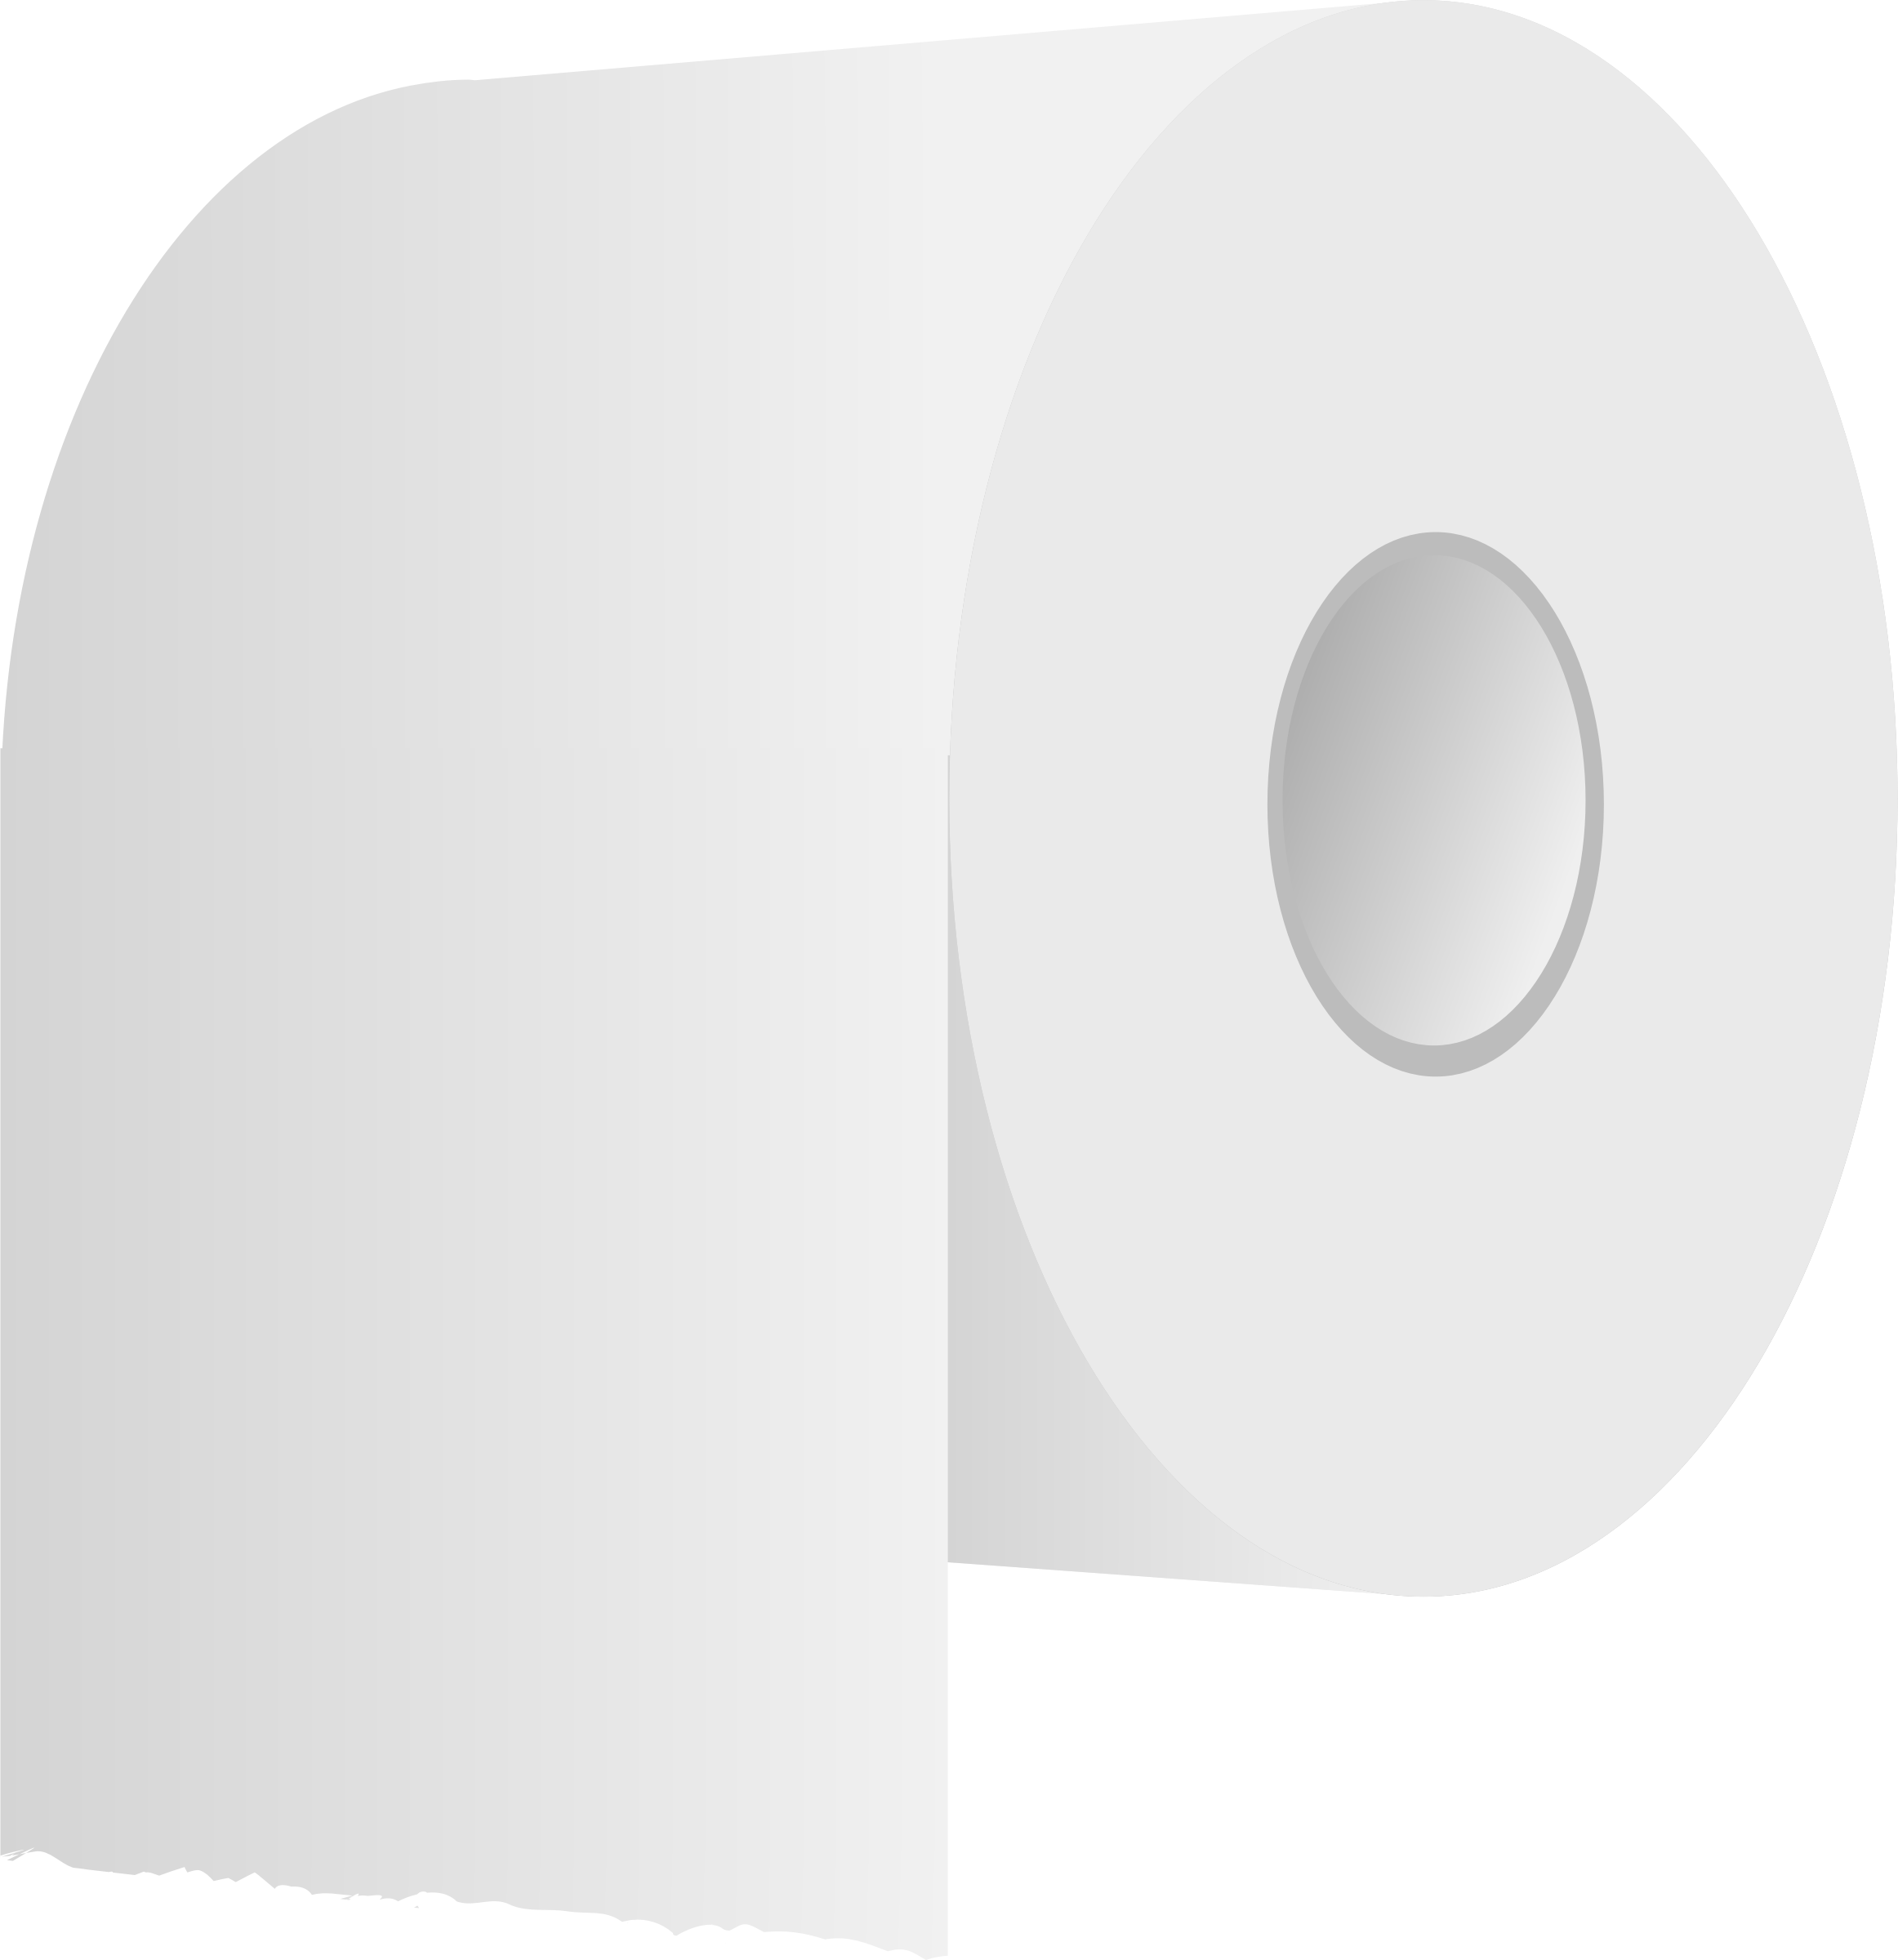 Toilet paper · Toothpaste Co